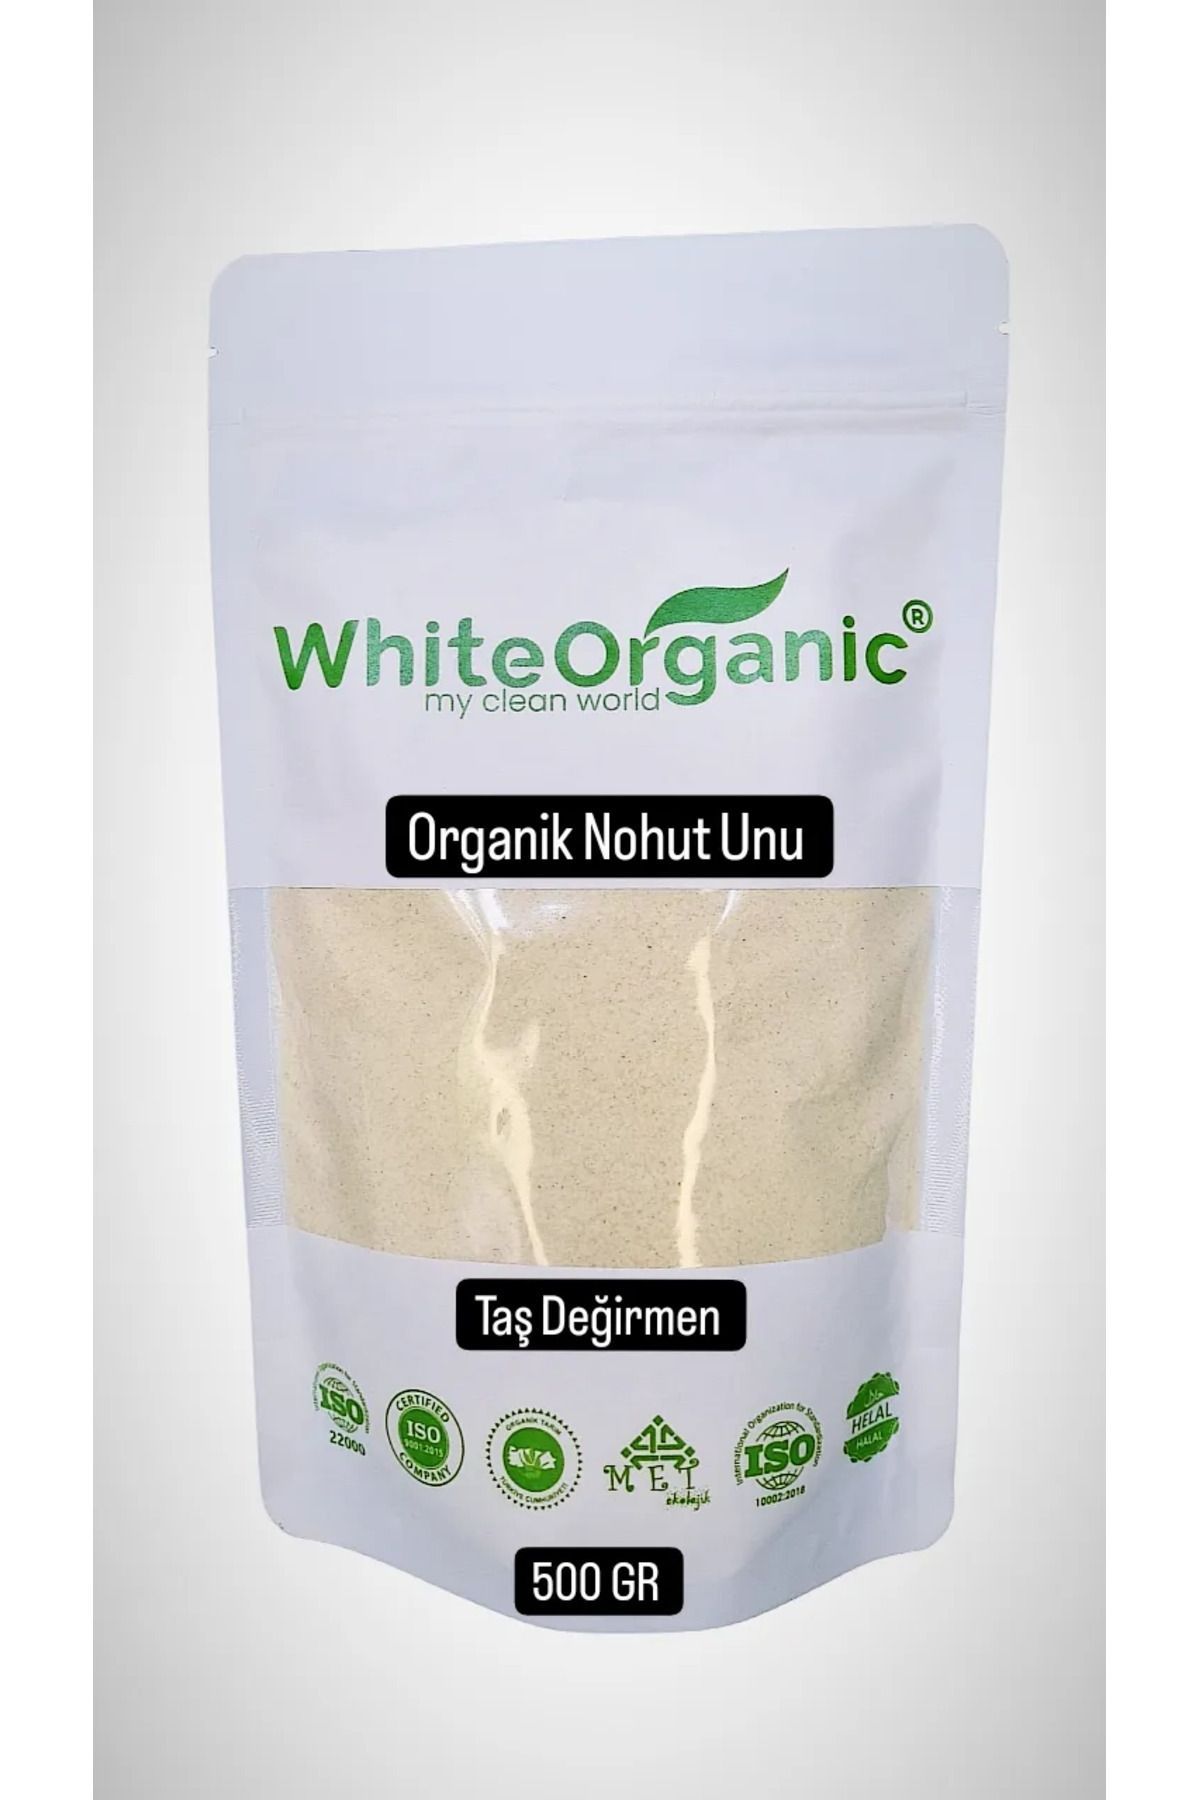 White Organic Organik Nohut Unu 500 gr Taş Değirmen Organic Chickpea Flour